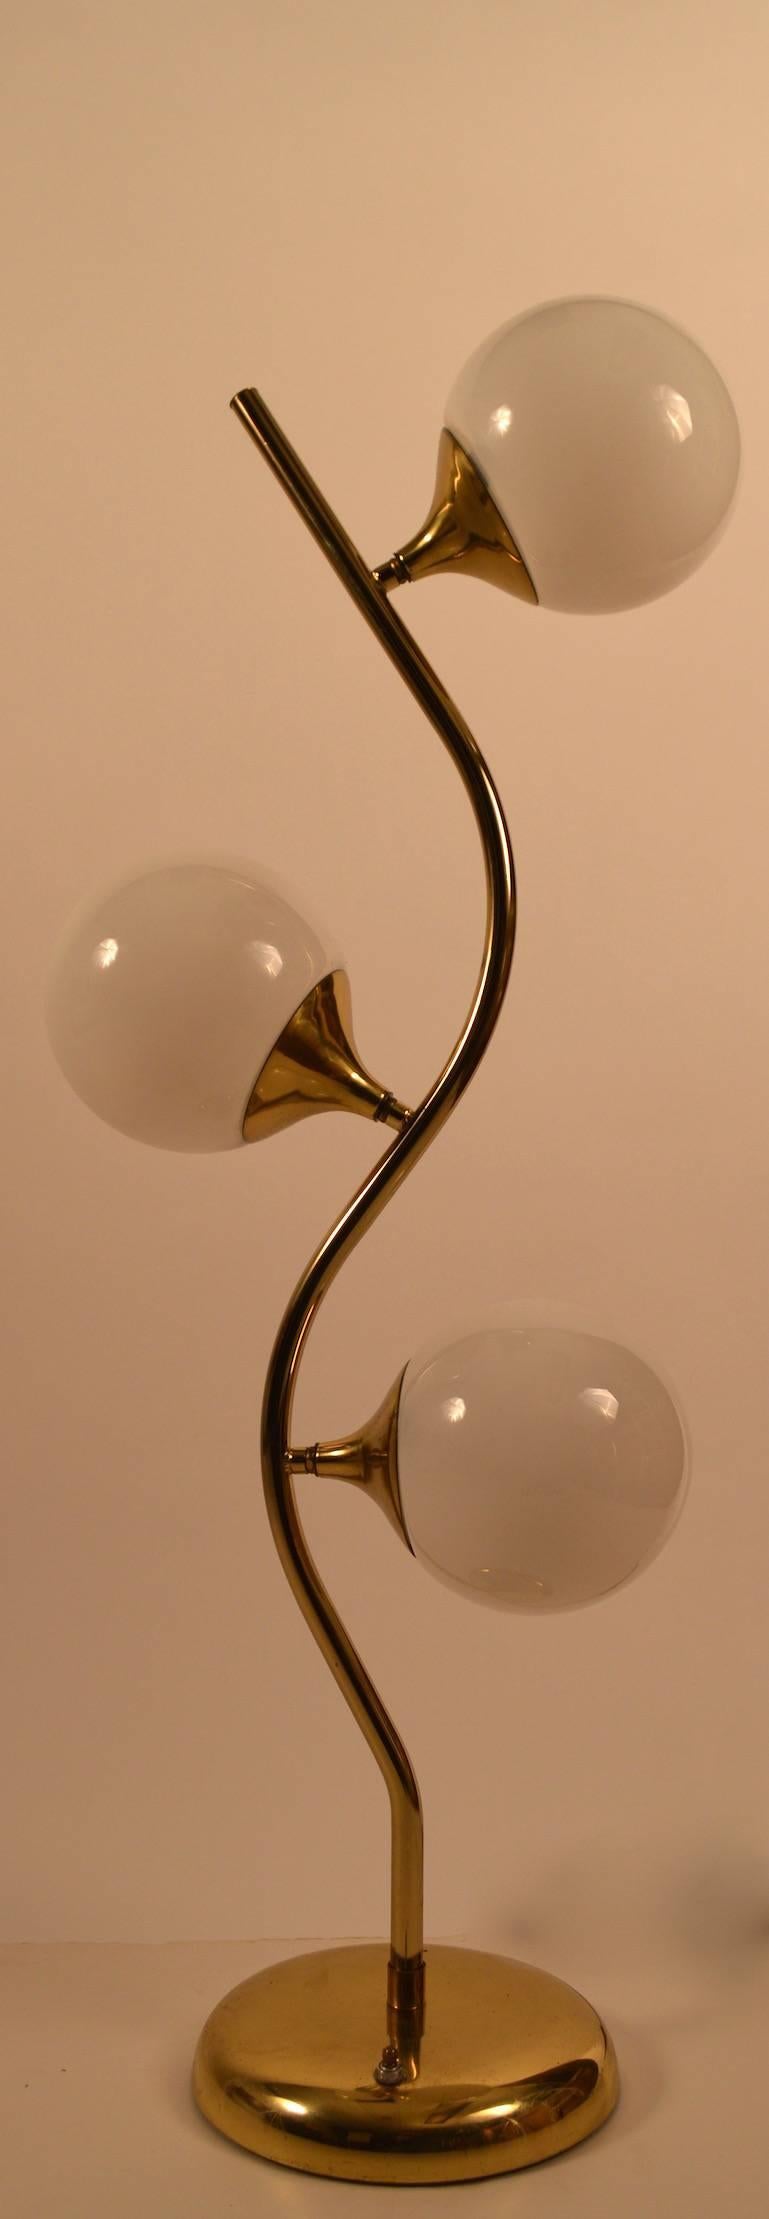 3 ball lamp